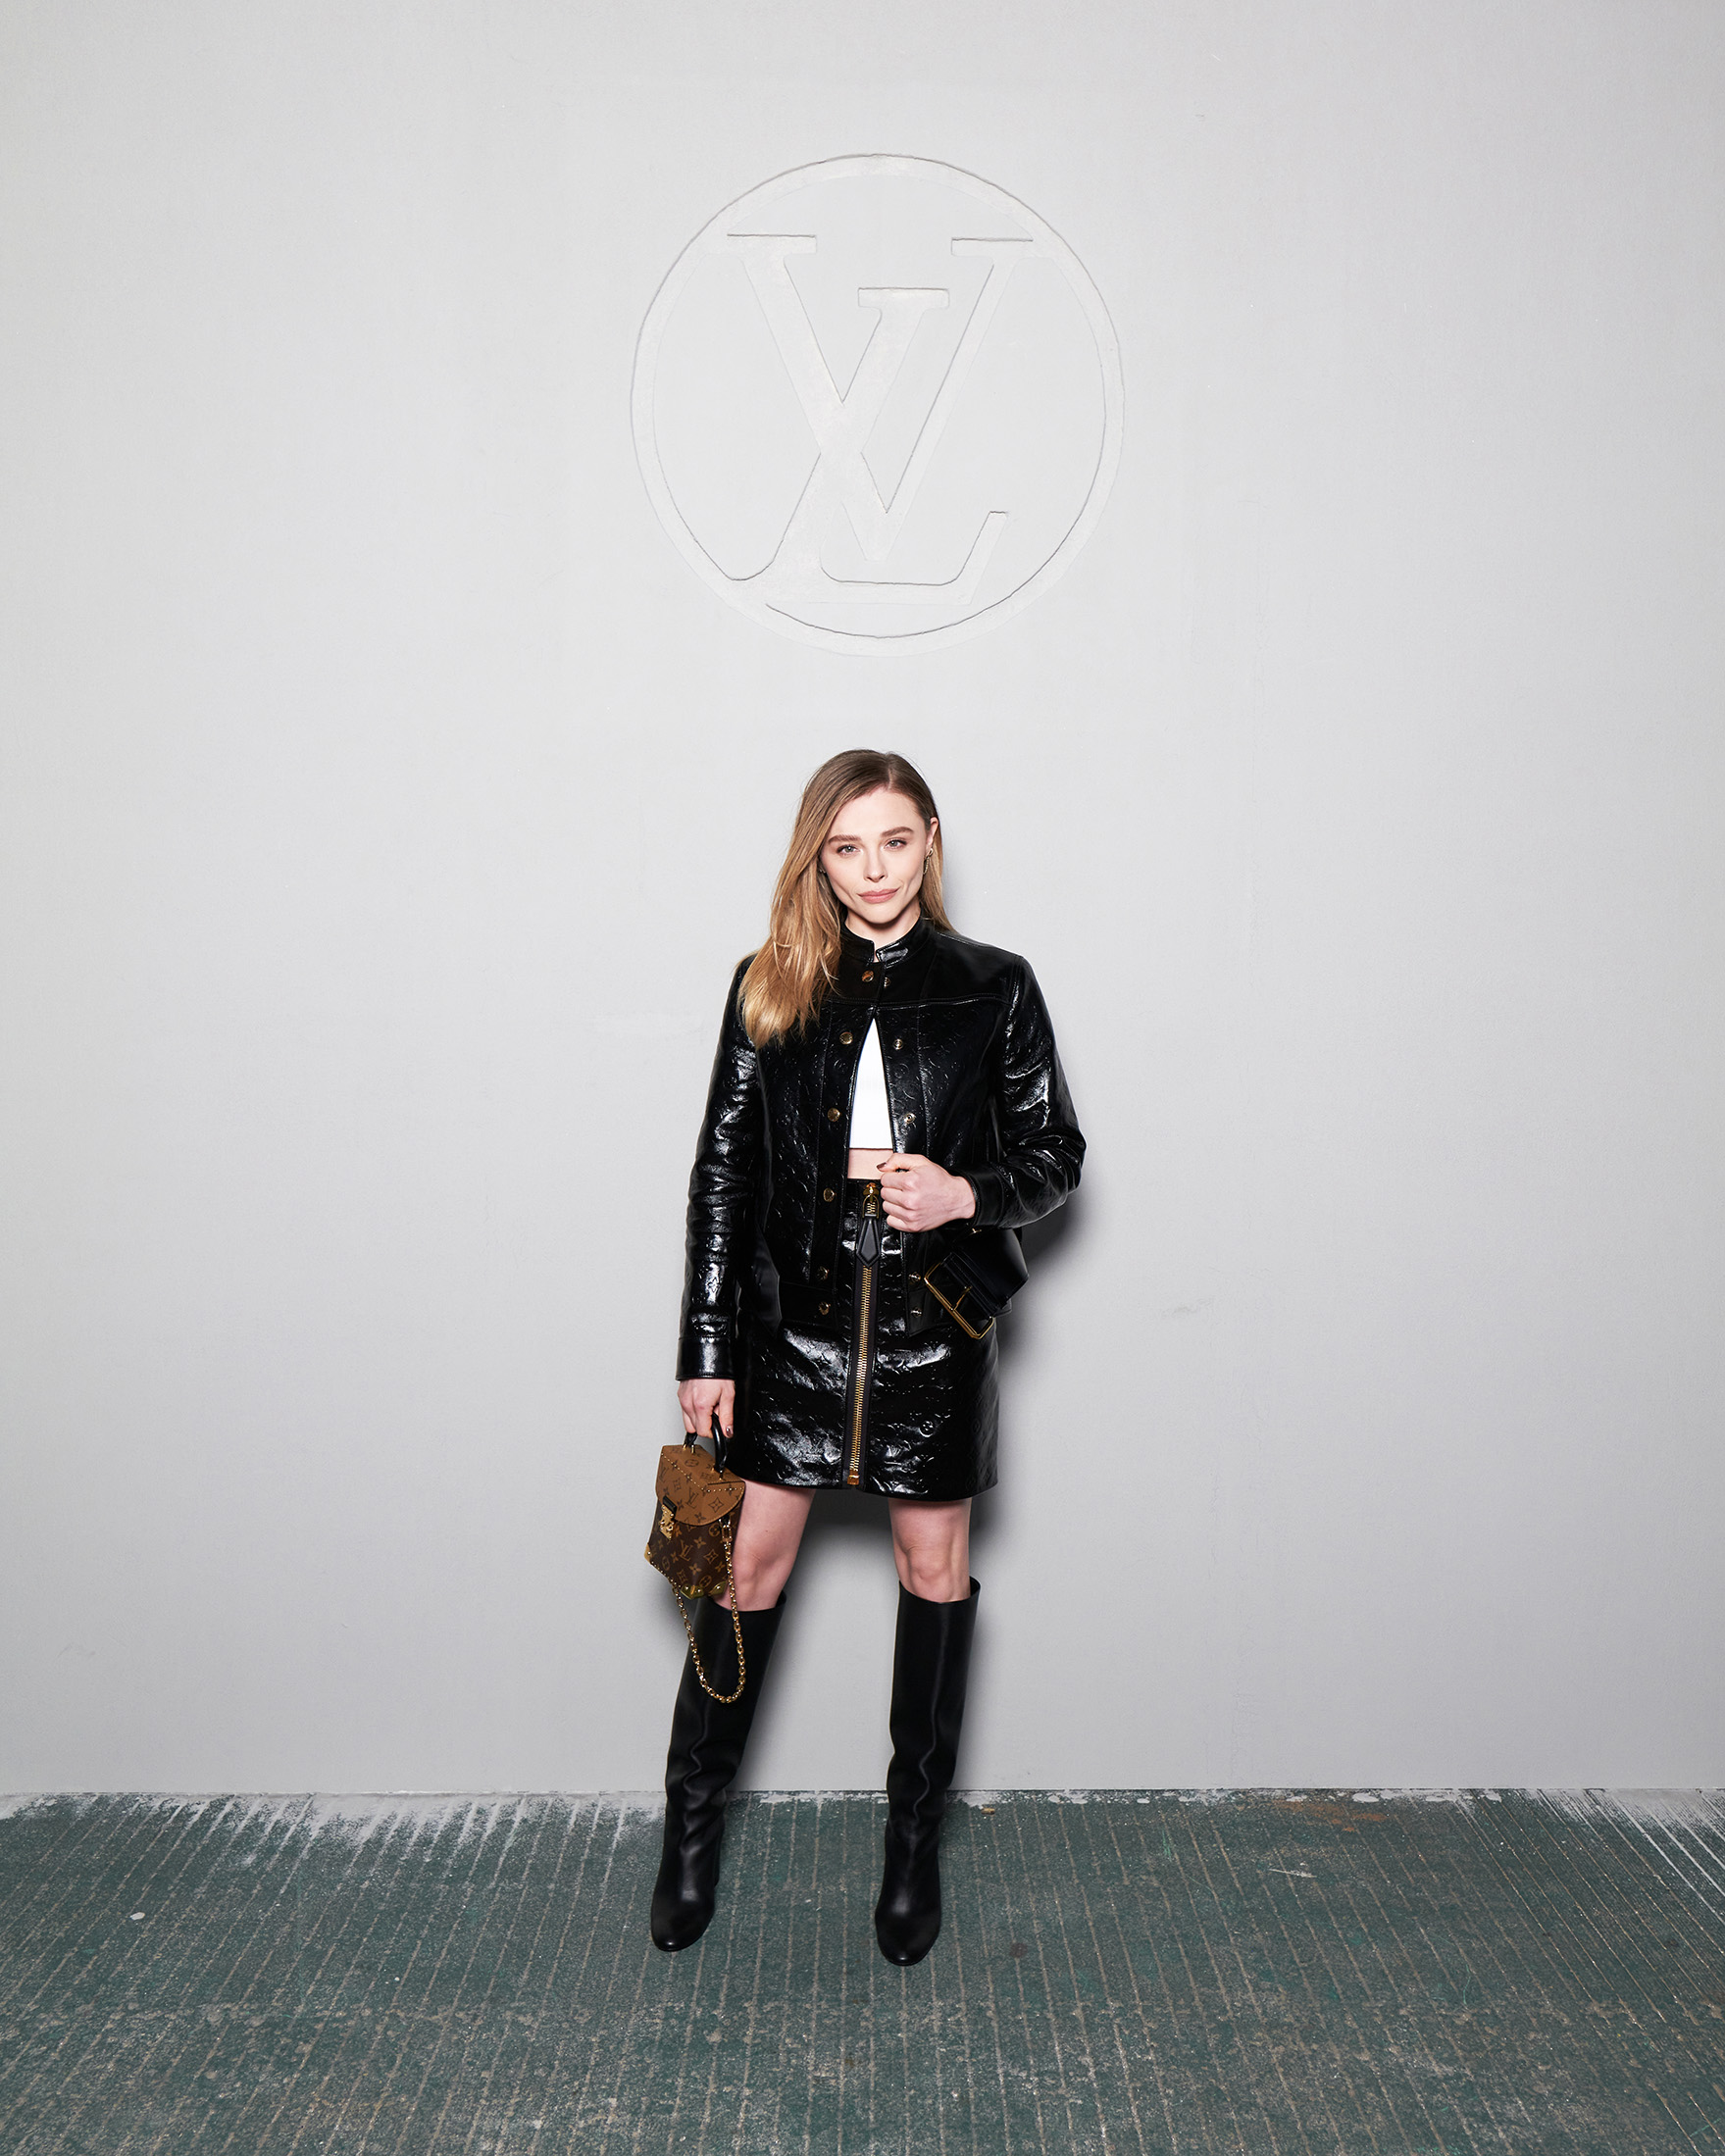 Why Louis Vuitton Pre-Fall 2023 Channeled Squid Game & K-Pop